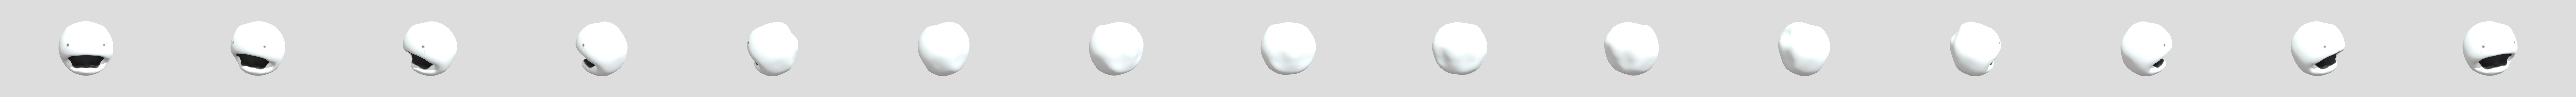 Whitey - BEAR (Alpha) - Download Free 3D model by spiffatron (@spiffatron)  [7a0e66d]